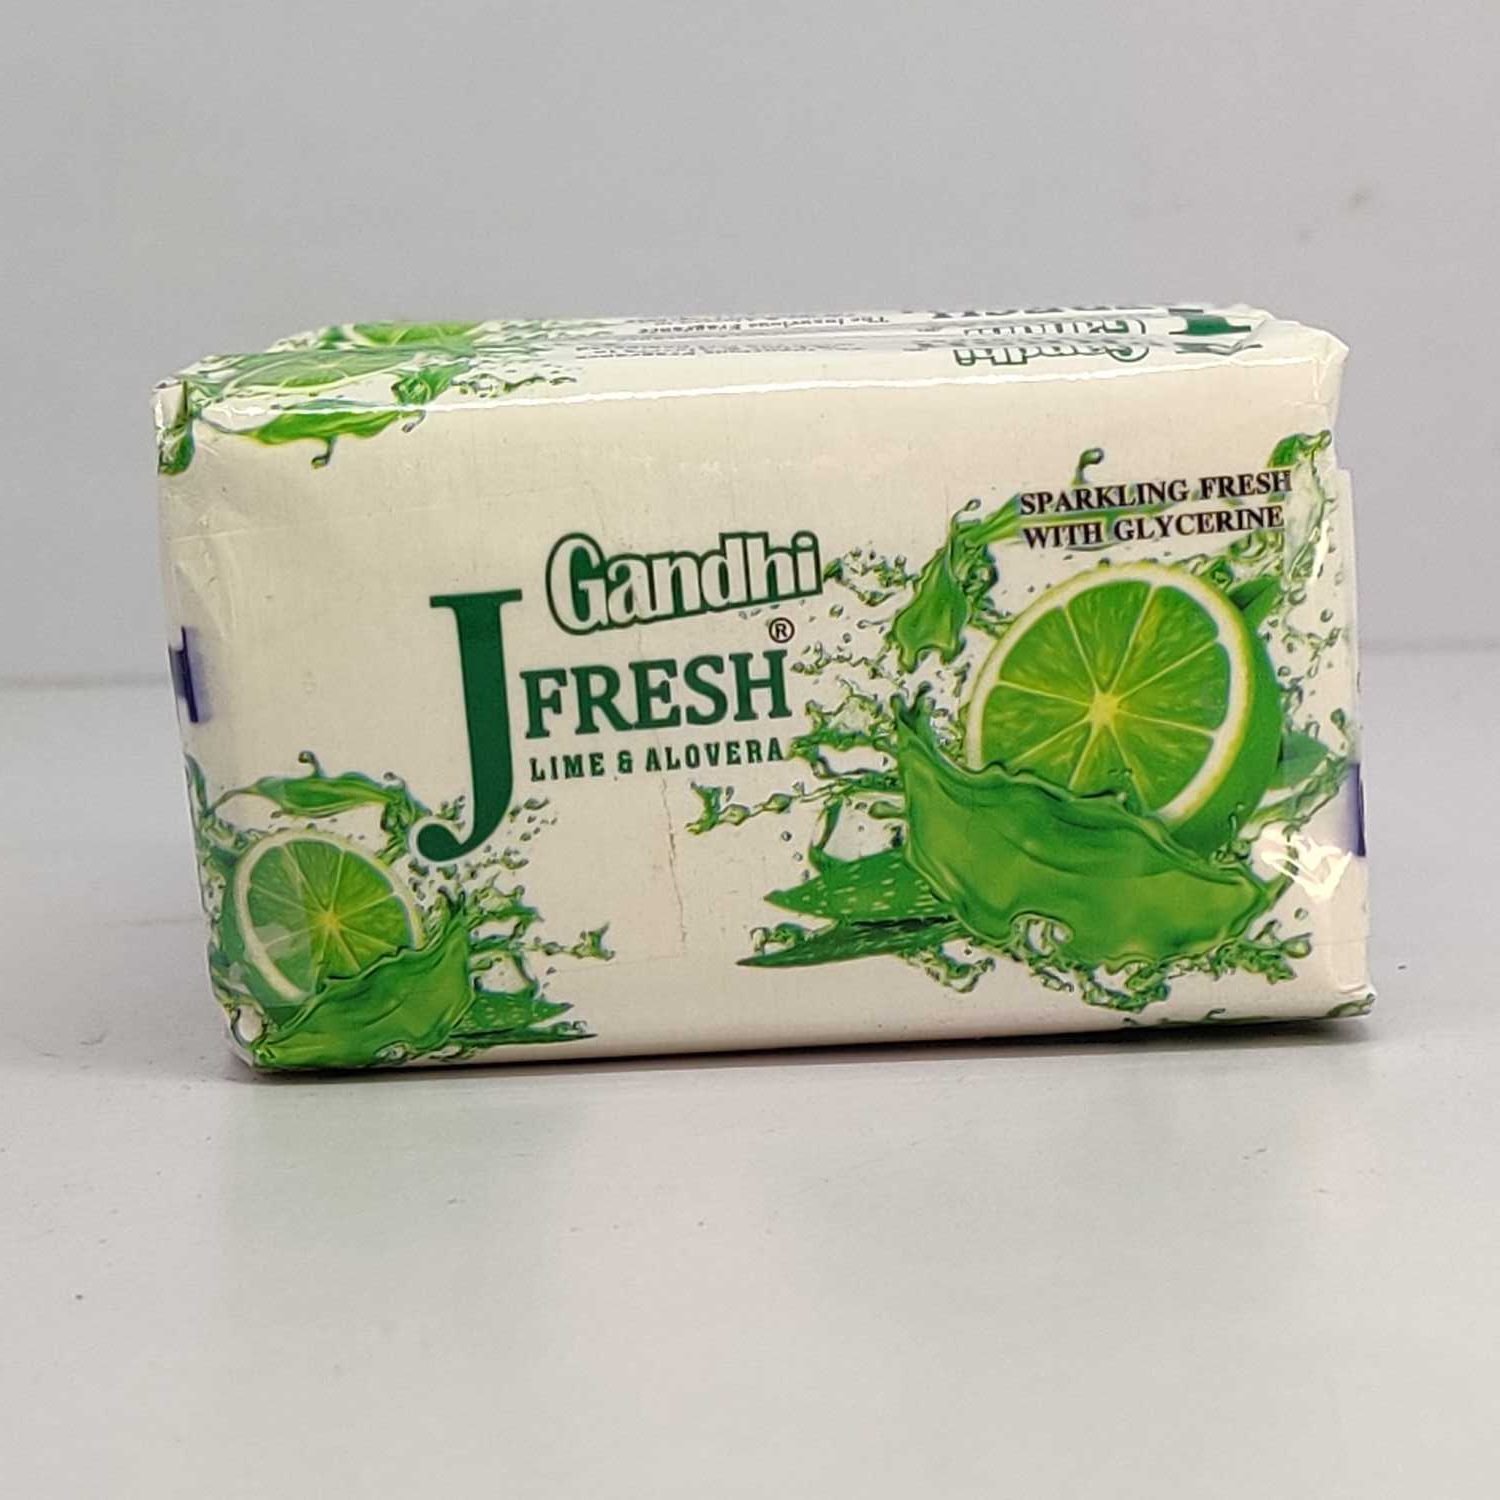 Gandhi J fresh lime and aloe vera,125 grams 4 Unit